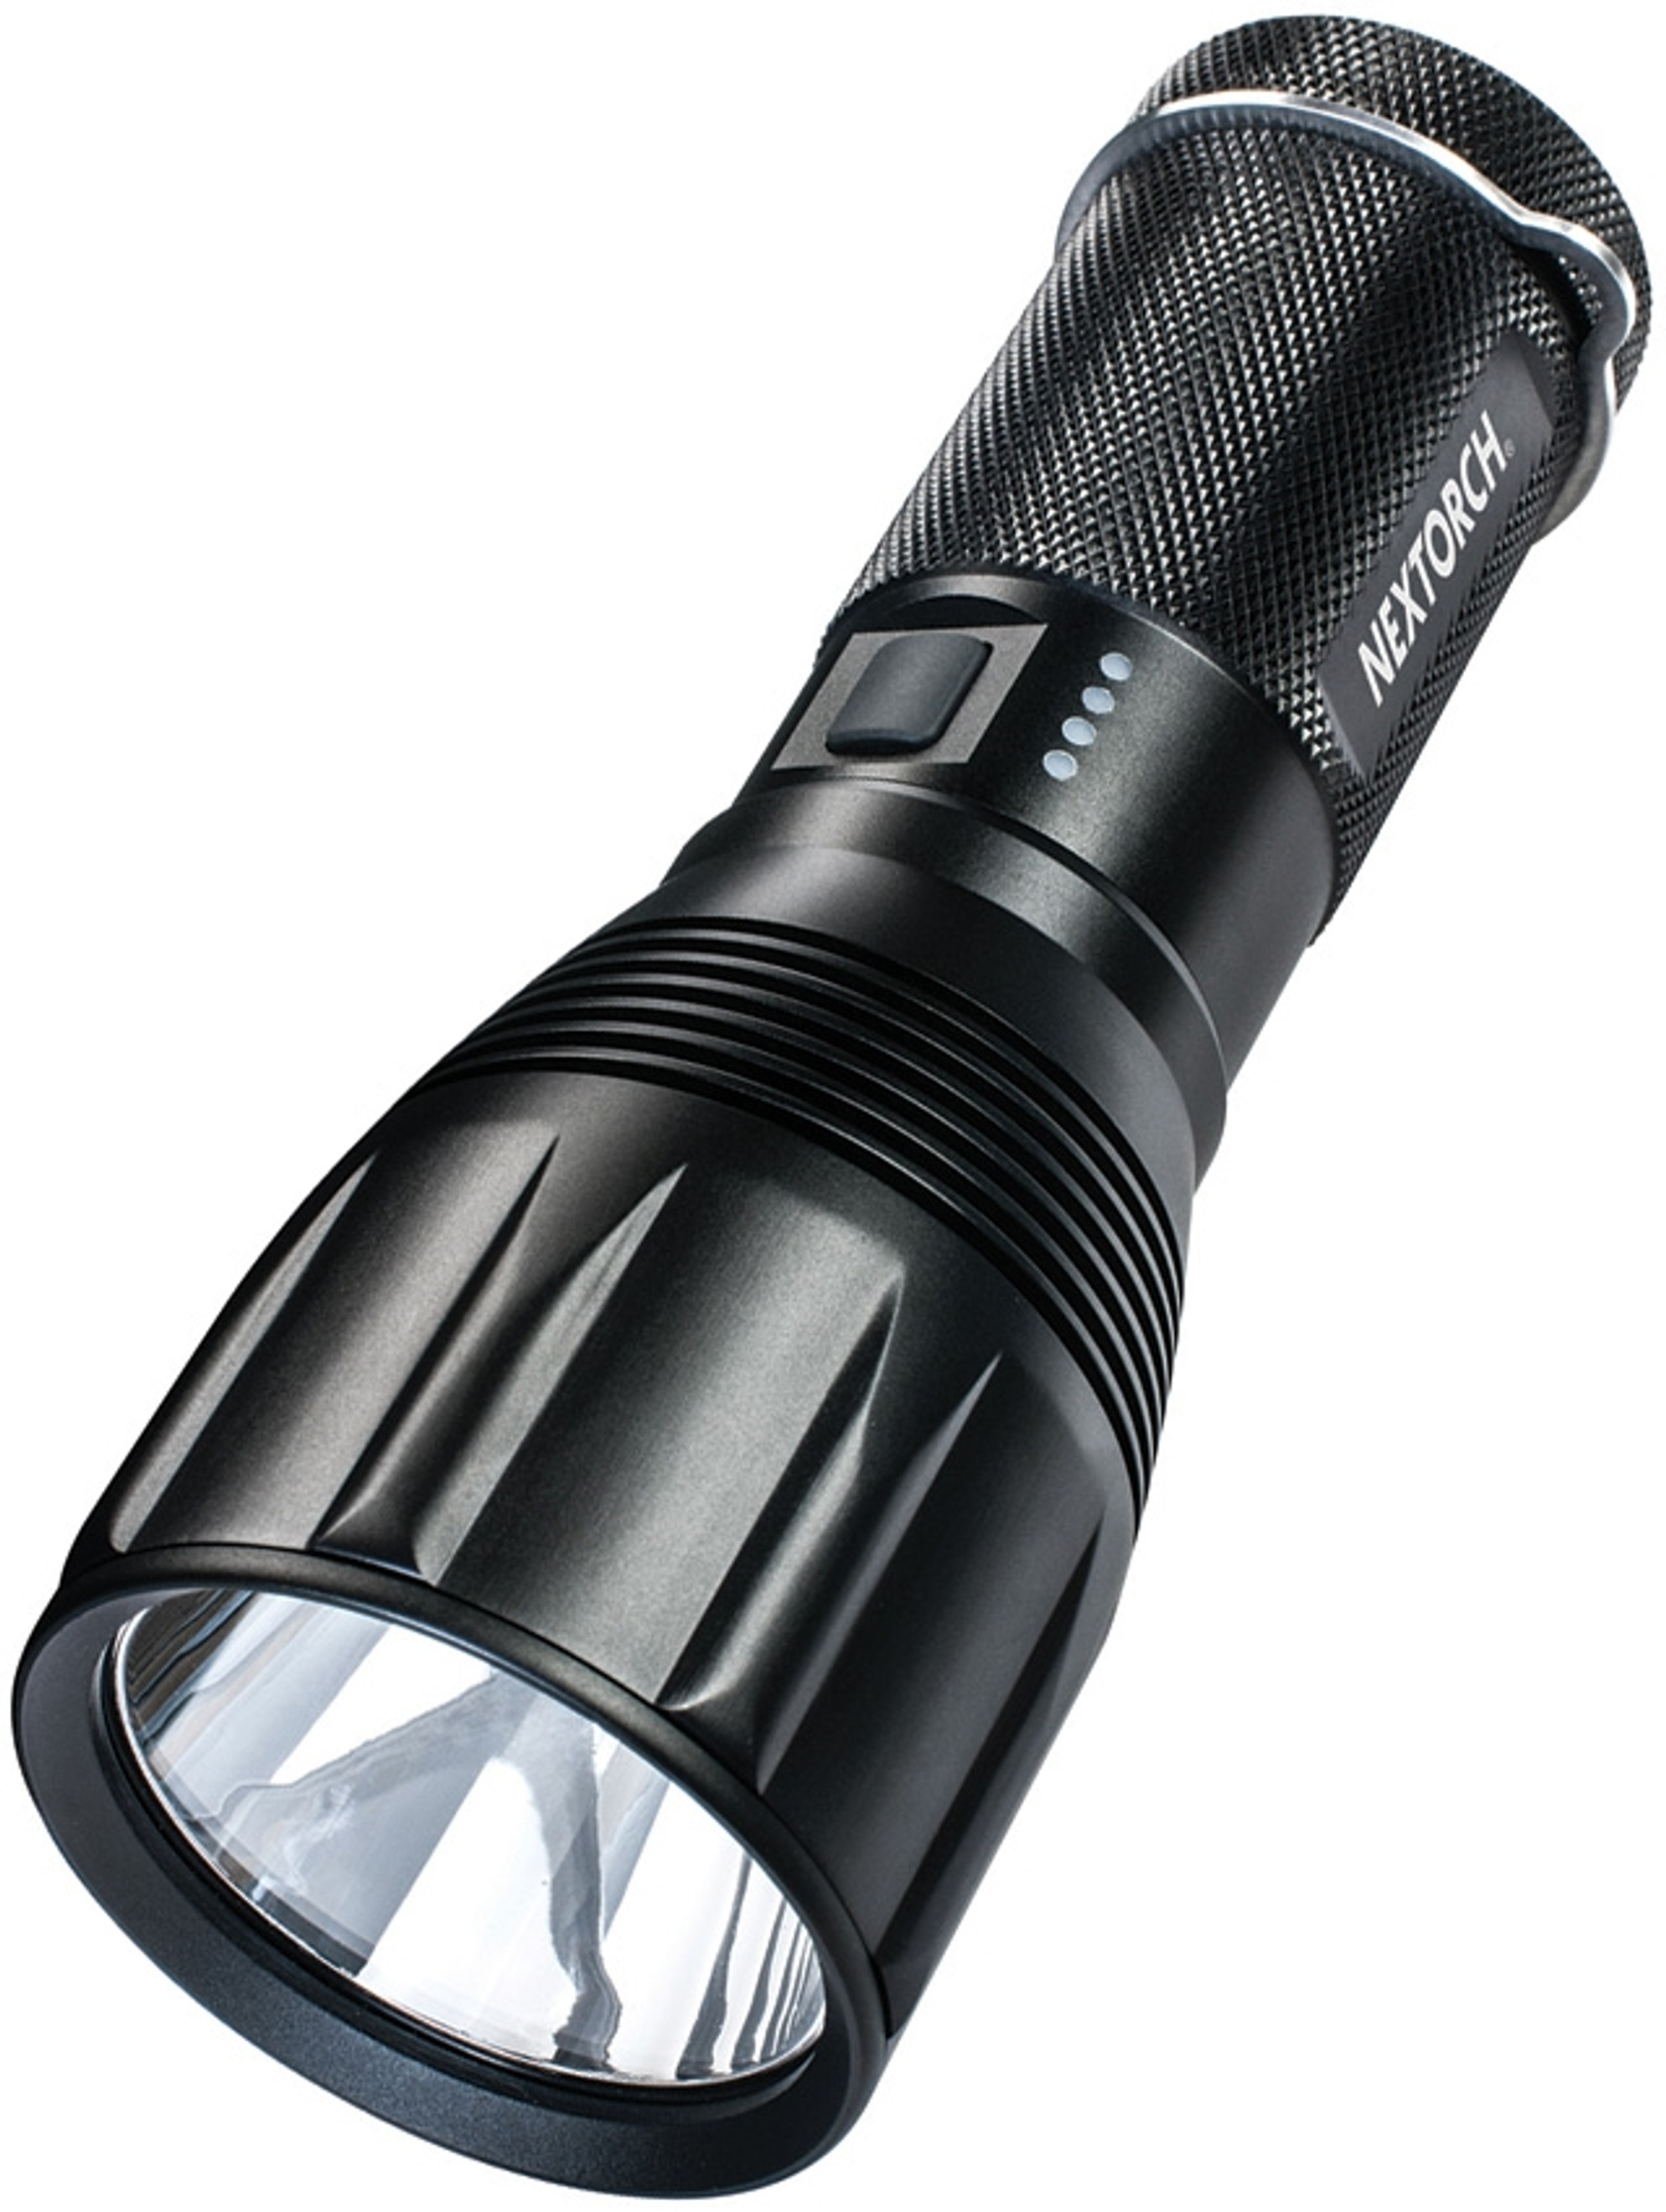 Saint Torch 1 LED Flashlight NXST1